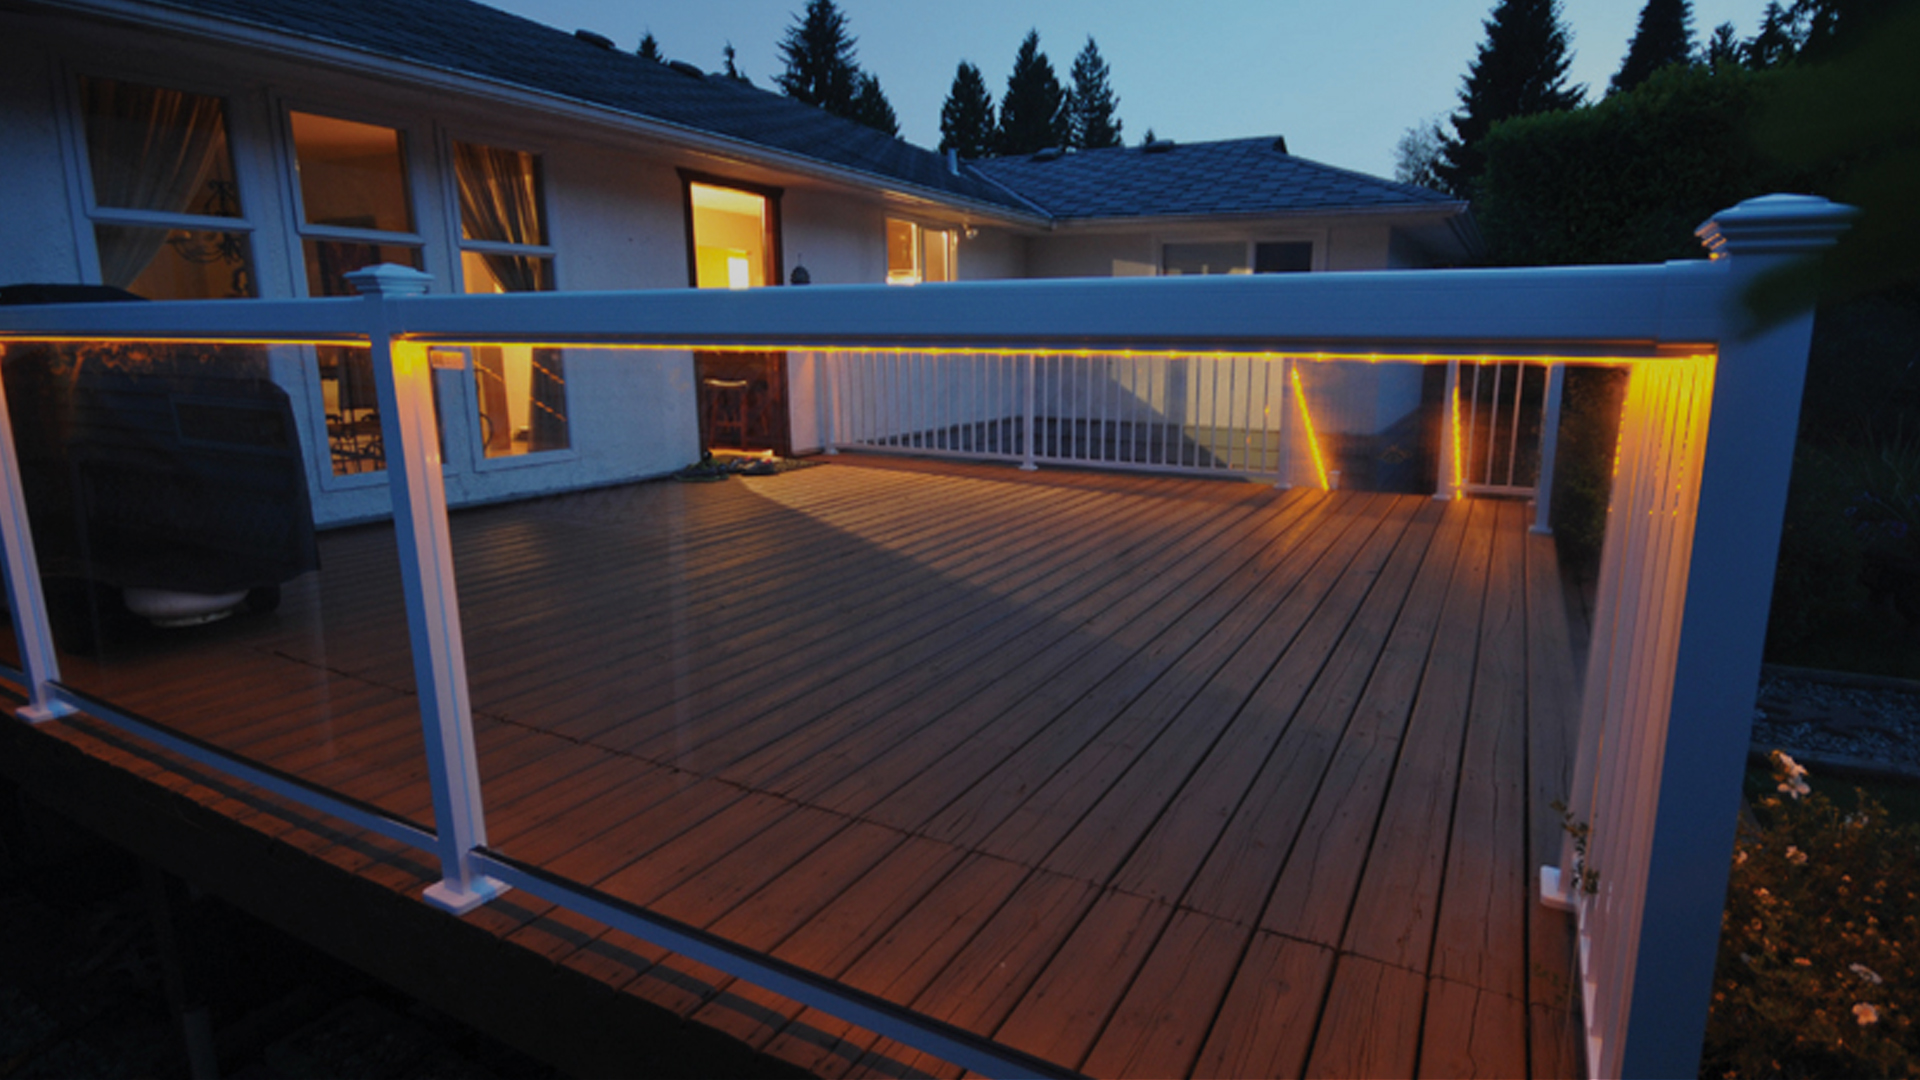 Led deck lighting